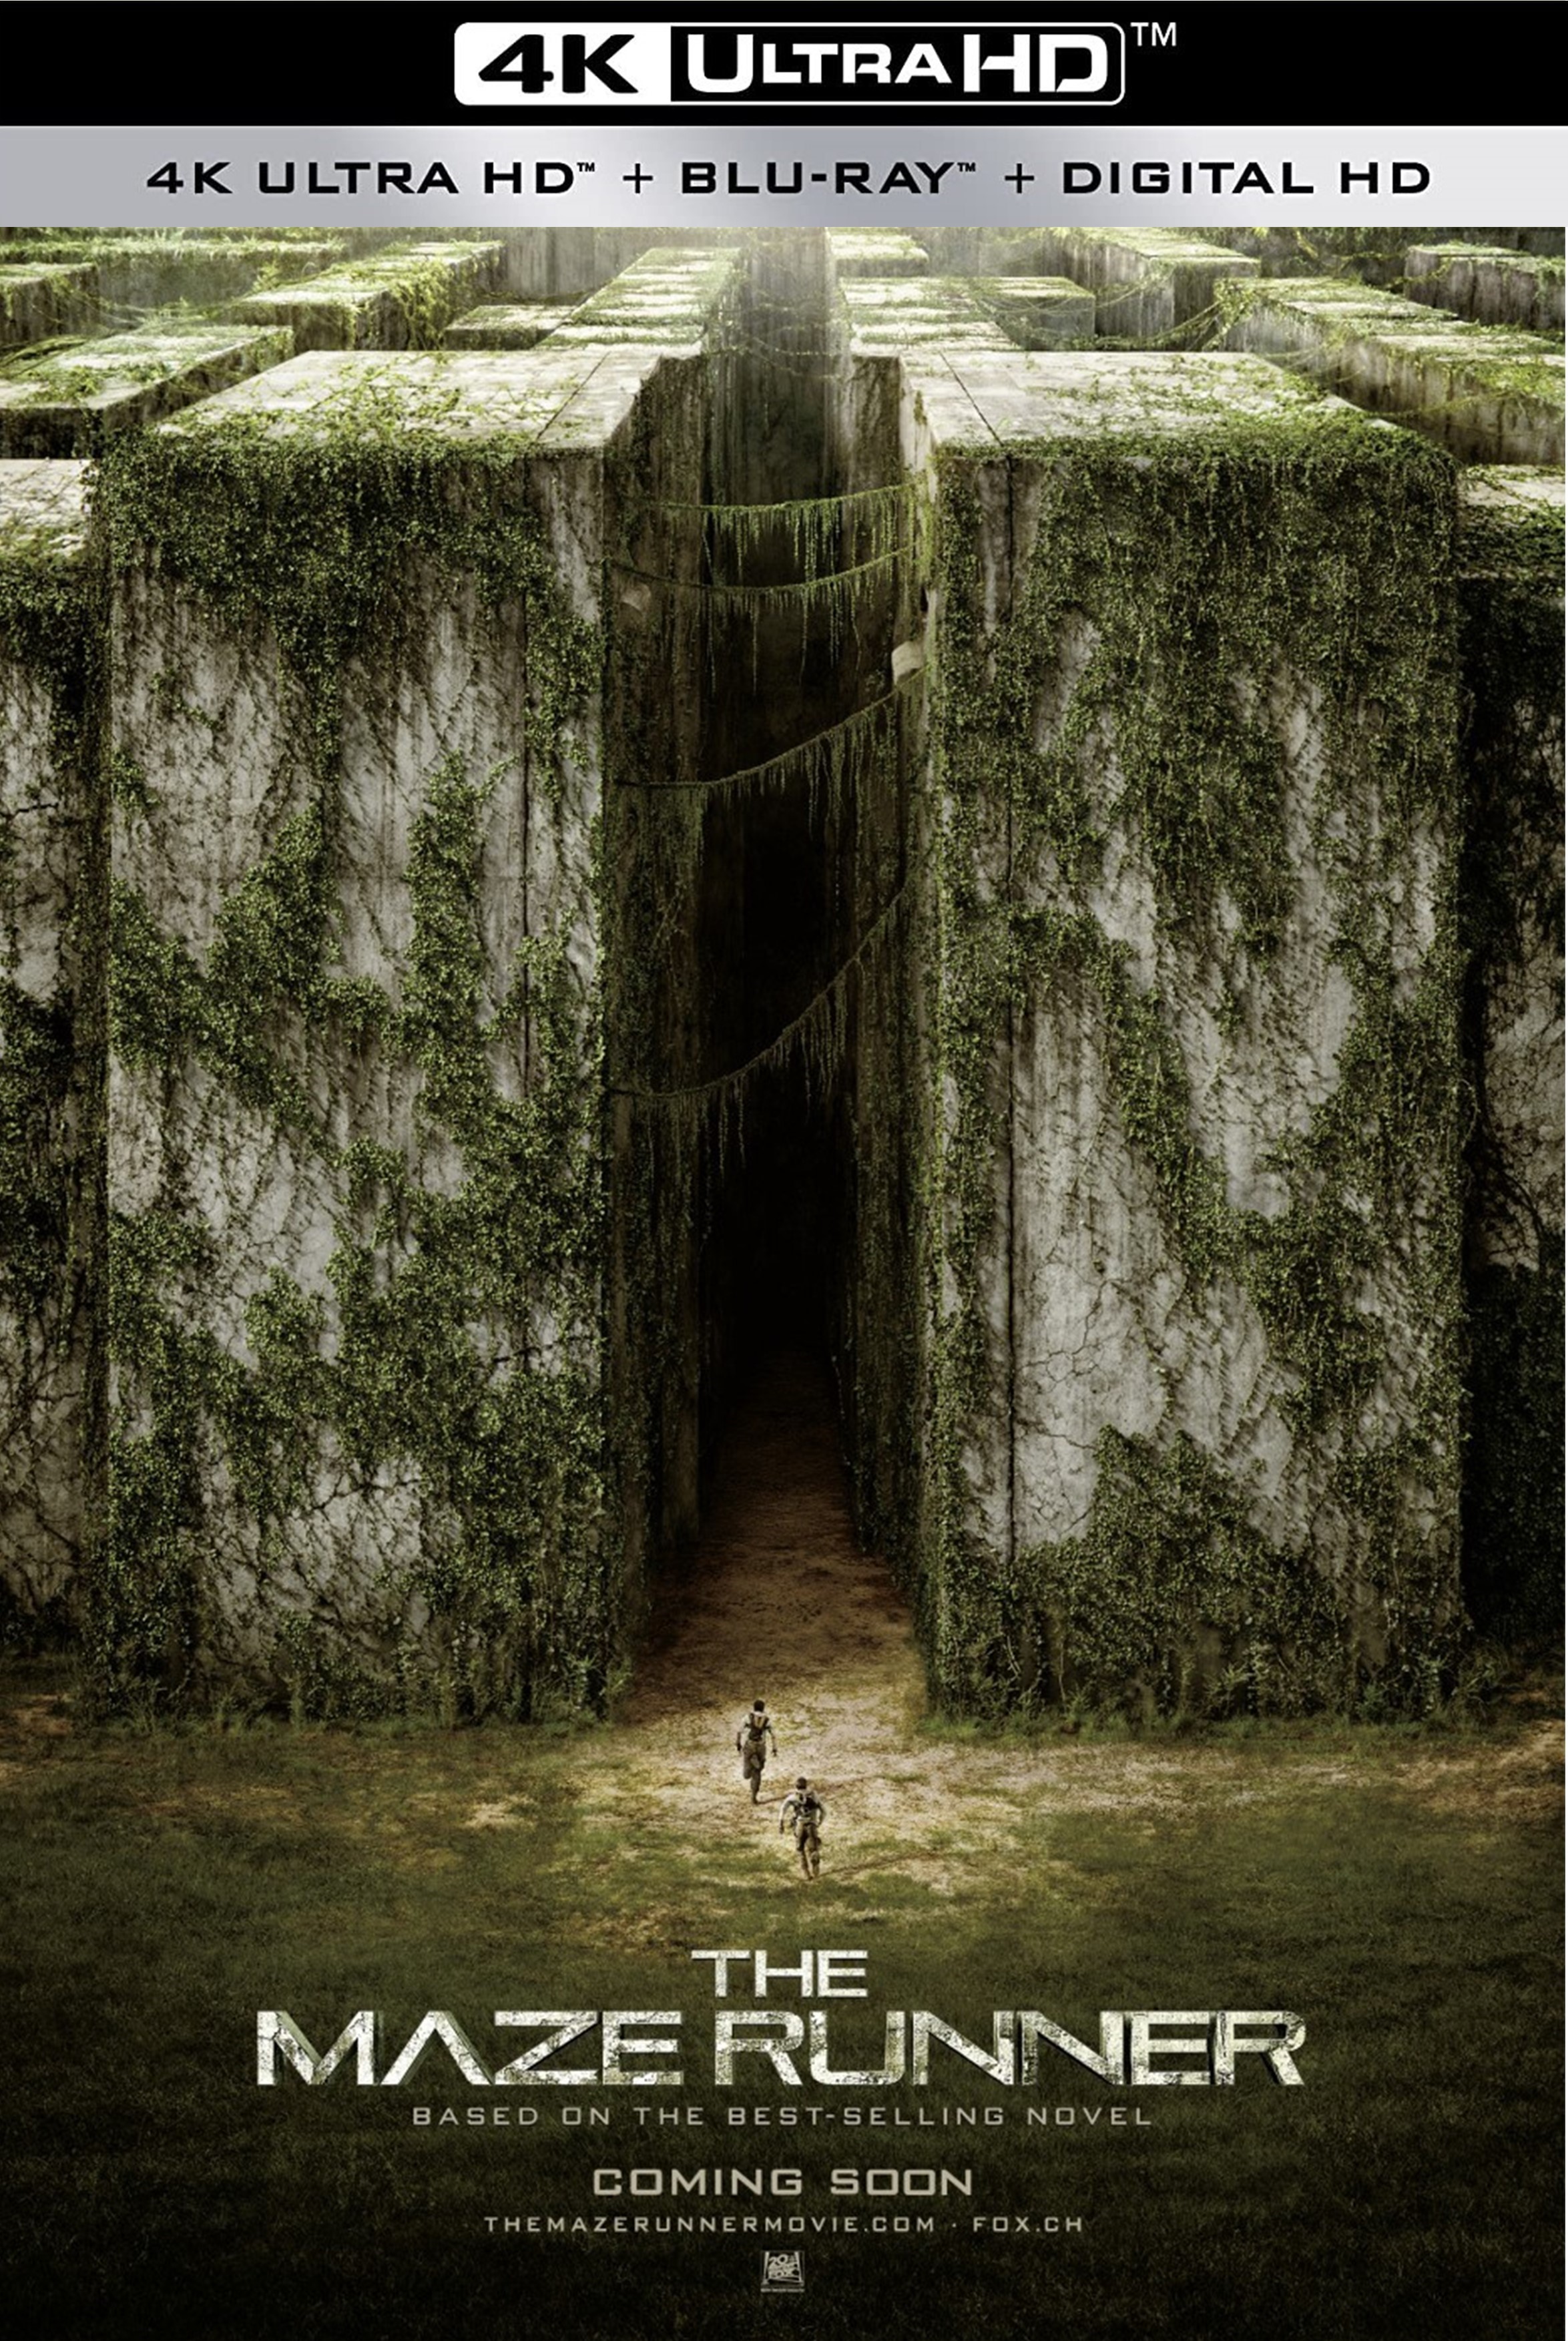 Stiahni si UHD Filmy Labyrint: Utek / The Maze Runner  (2014)(CZ/EN)(2160p 4K BRRip) = CSFD 67%